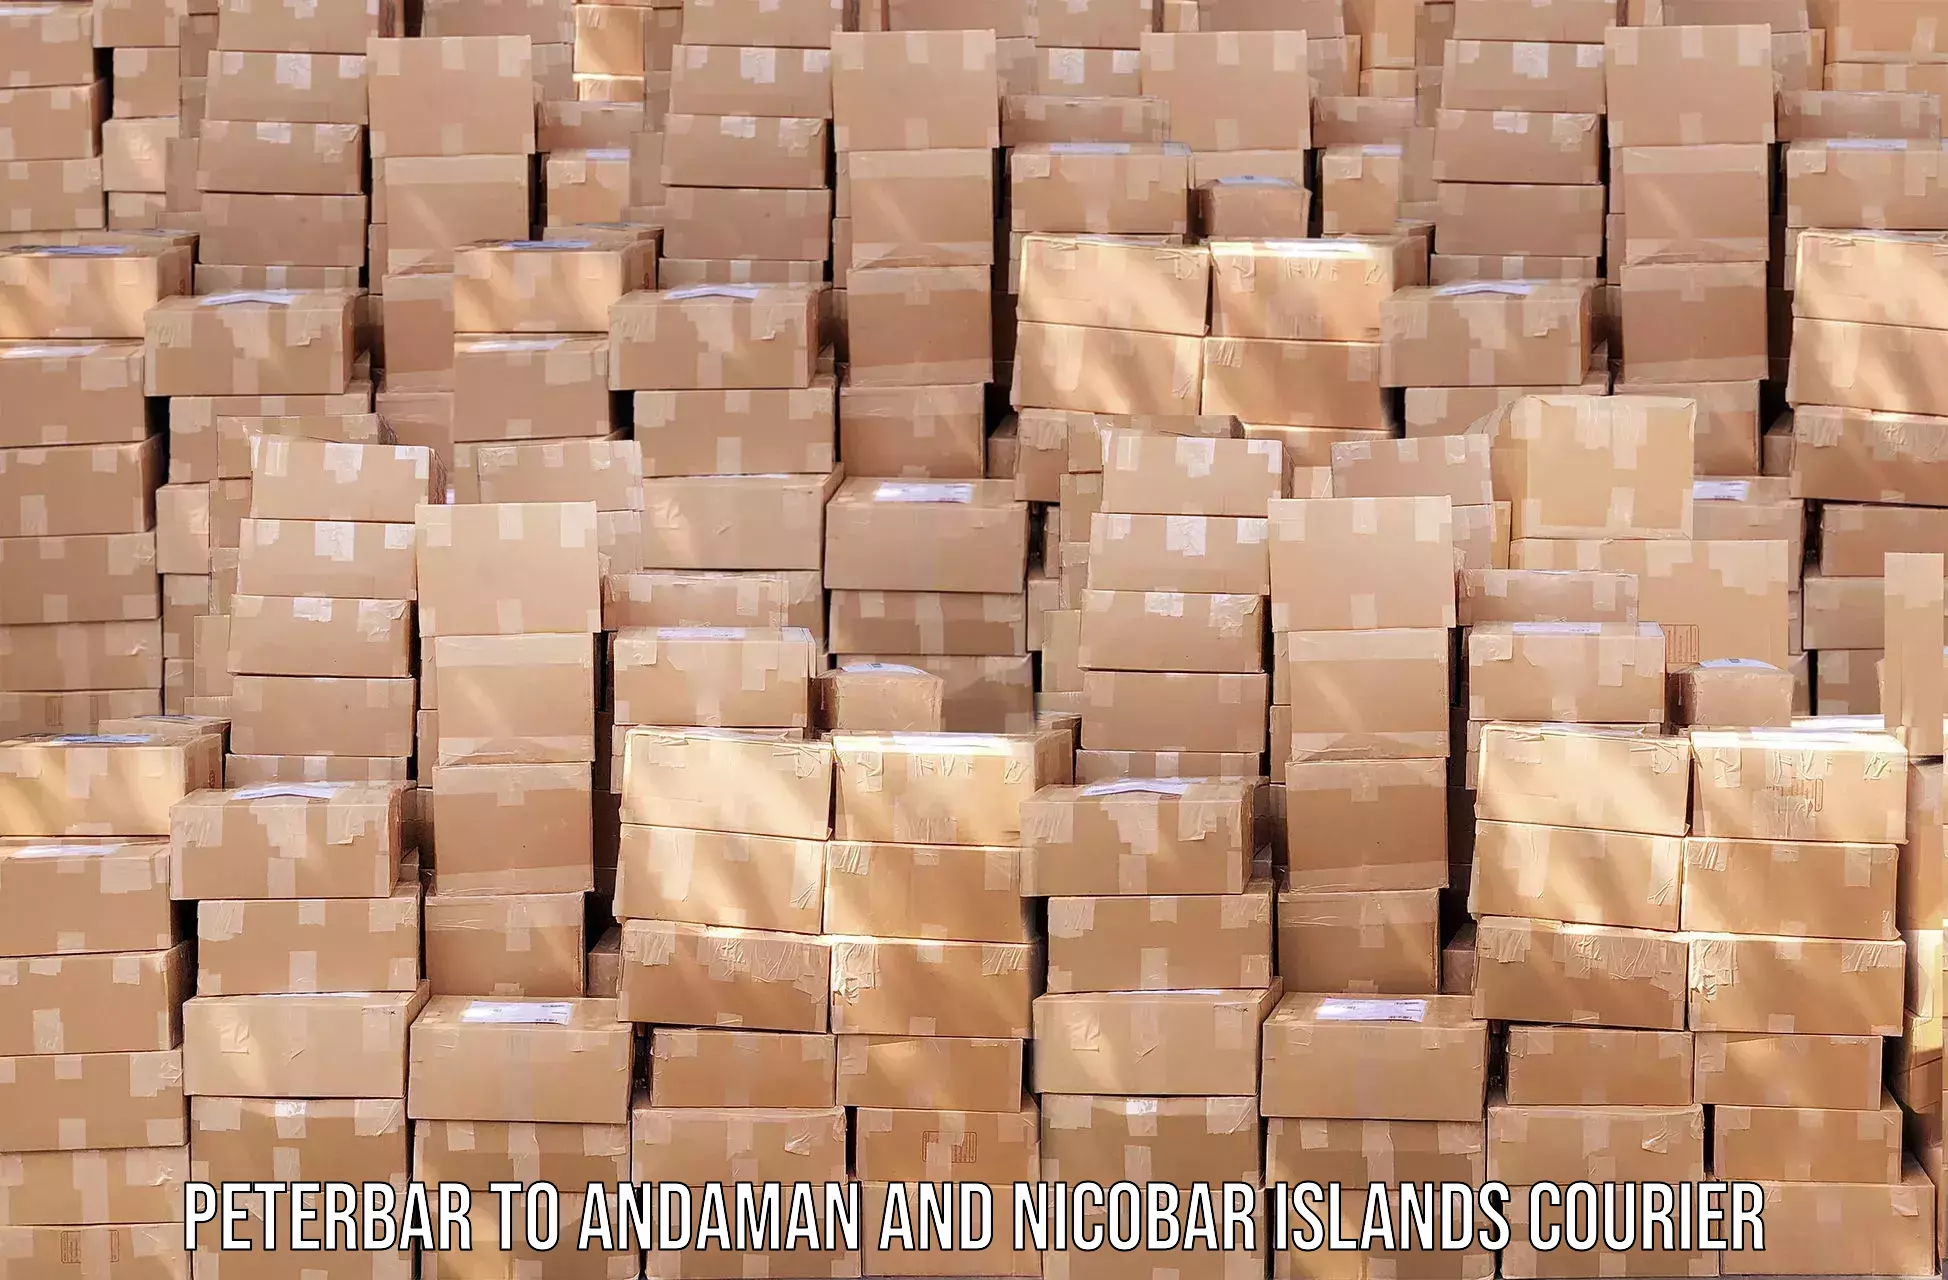 Global shipping networks Peterbar to Andaman and Nicobar Islands